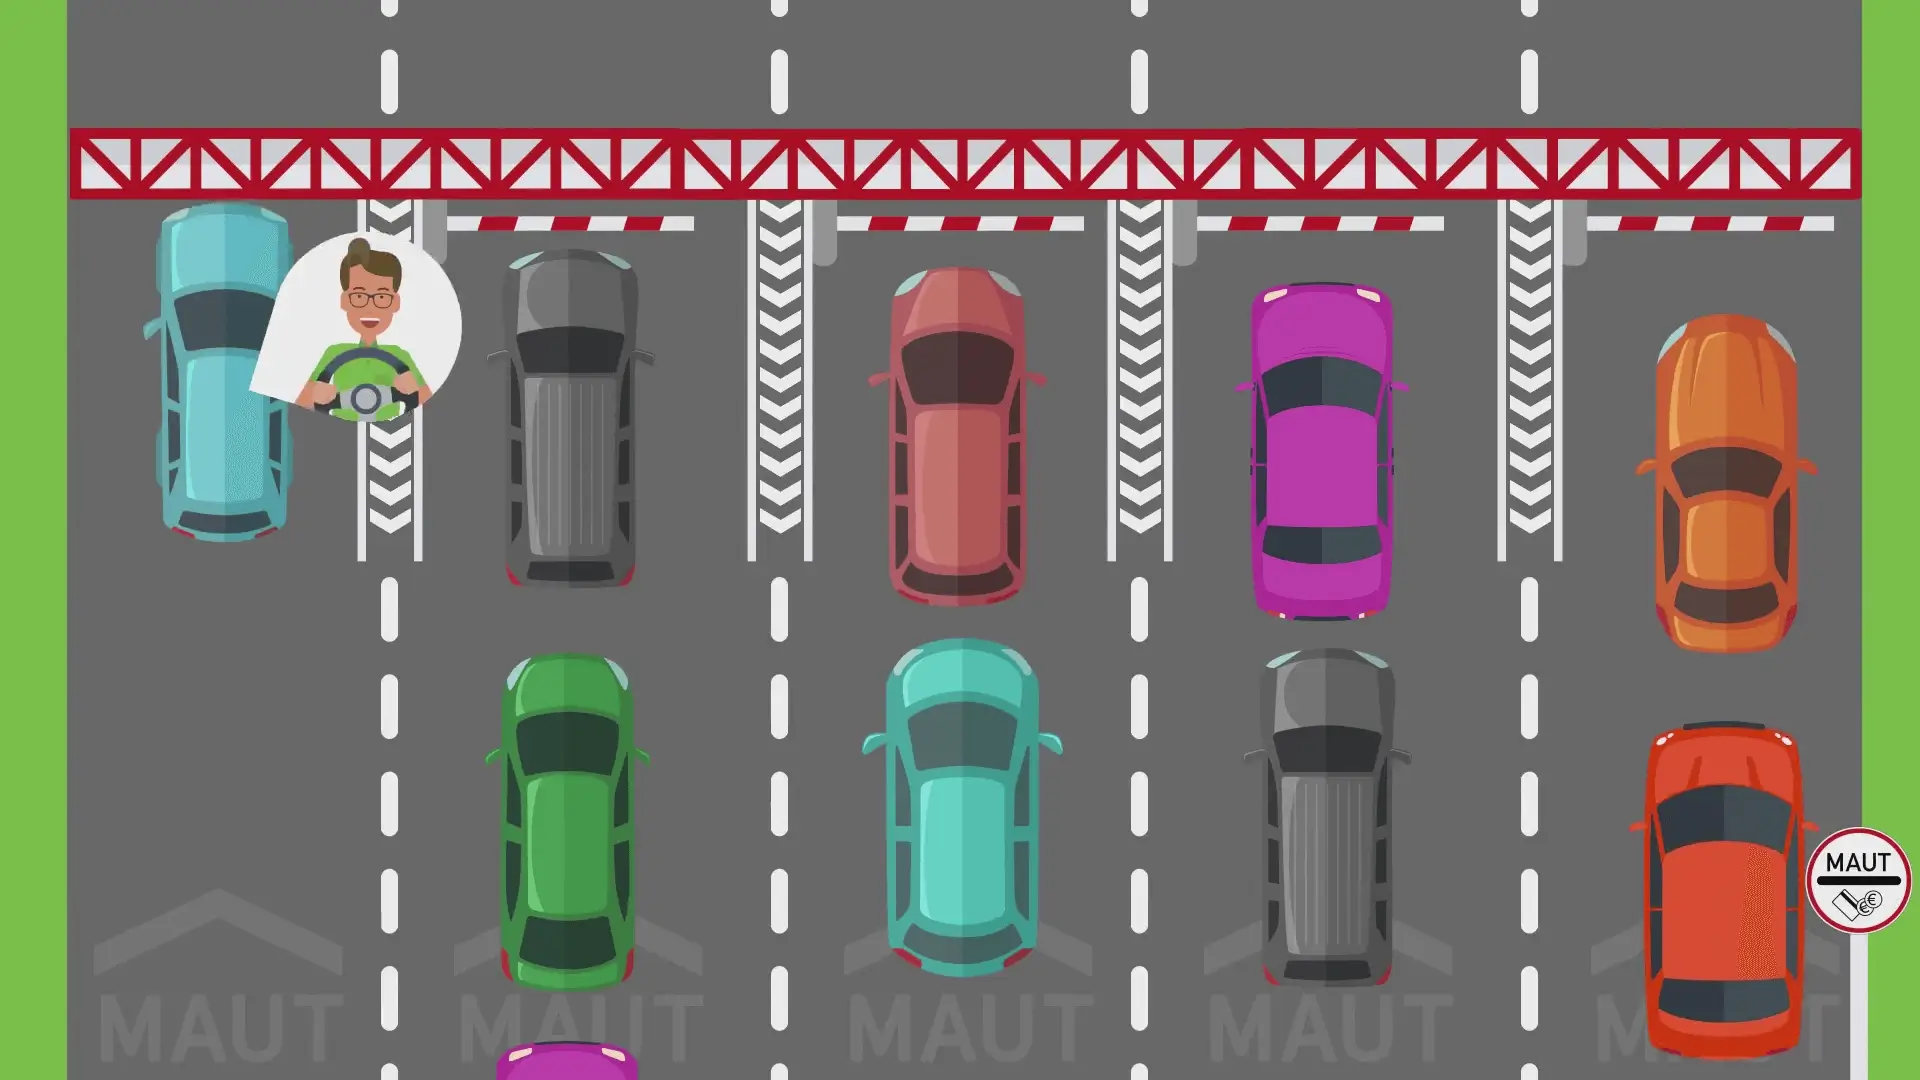 Explanatory video: How the maut1.de toll box works?